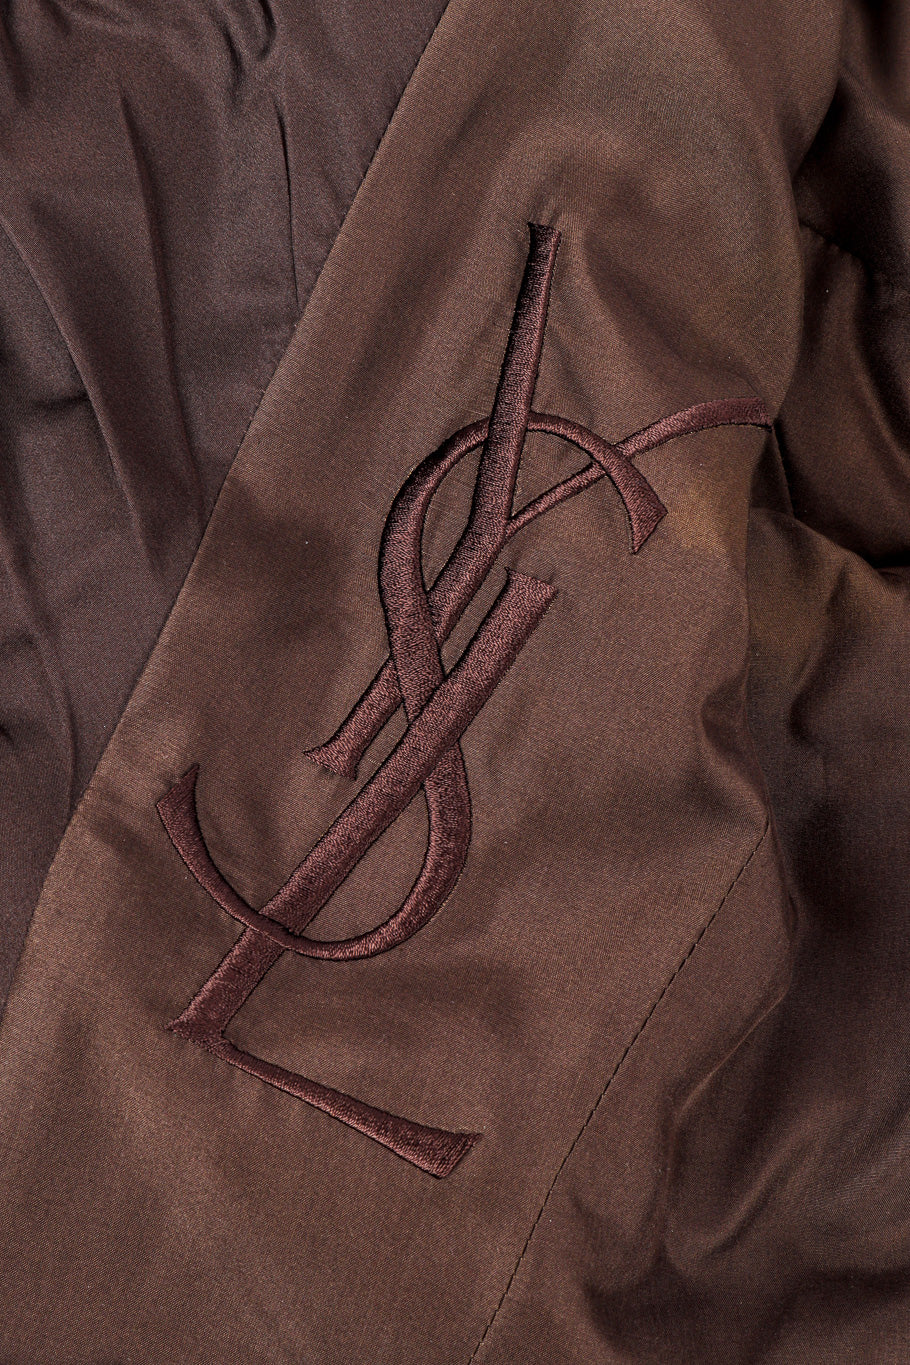 Silk velvet jacket by Yves Saint Laurent embroidered insignia  @recessla